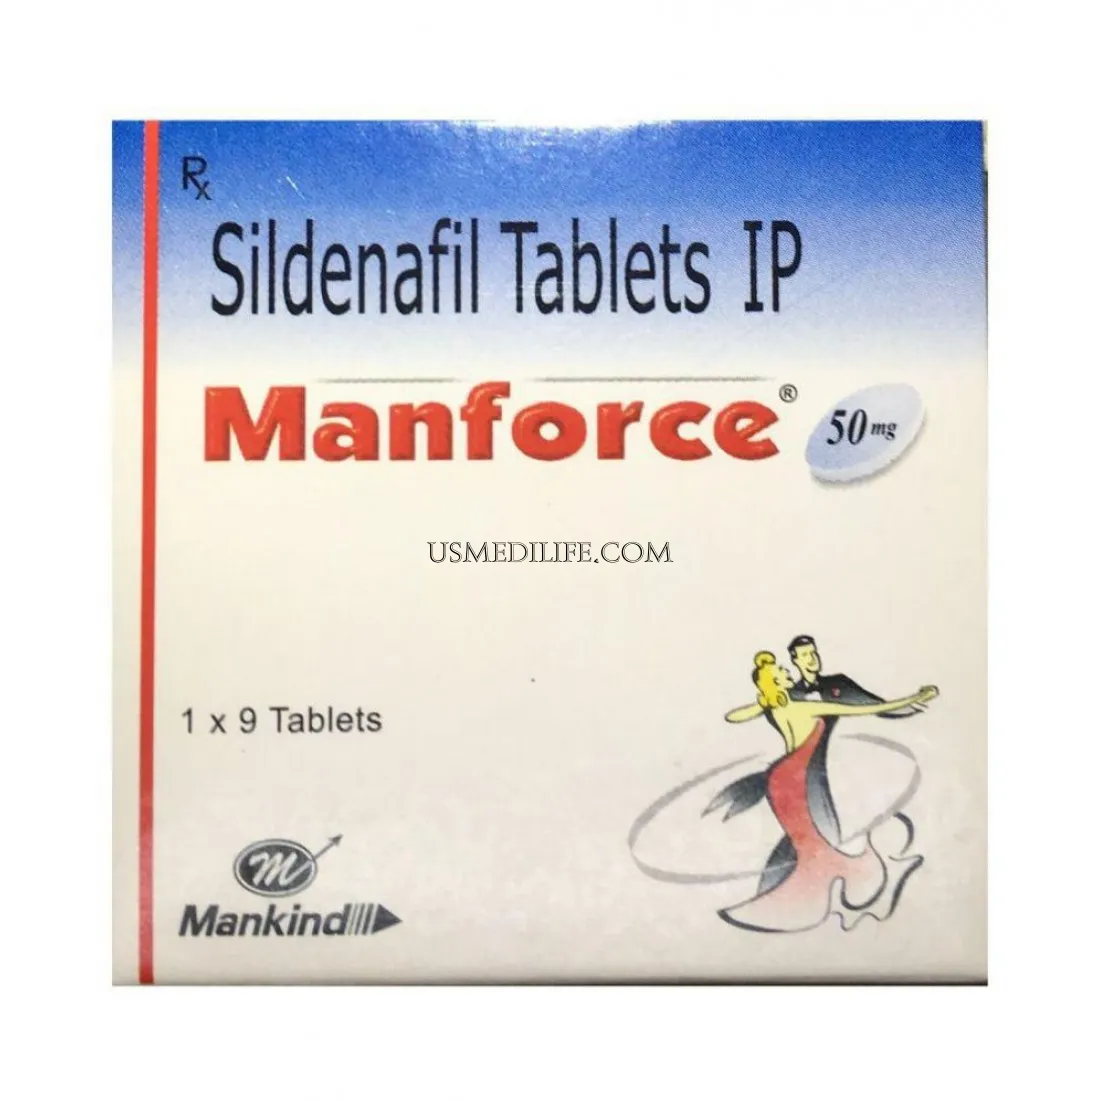 Manforce 50 mg image